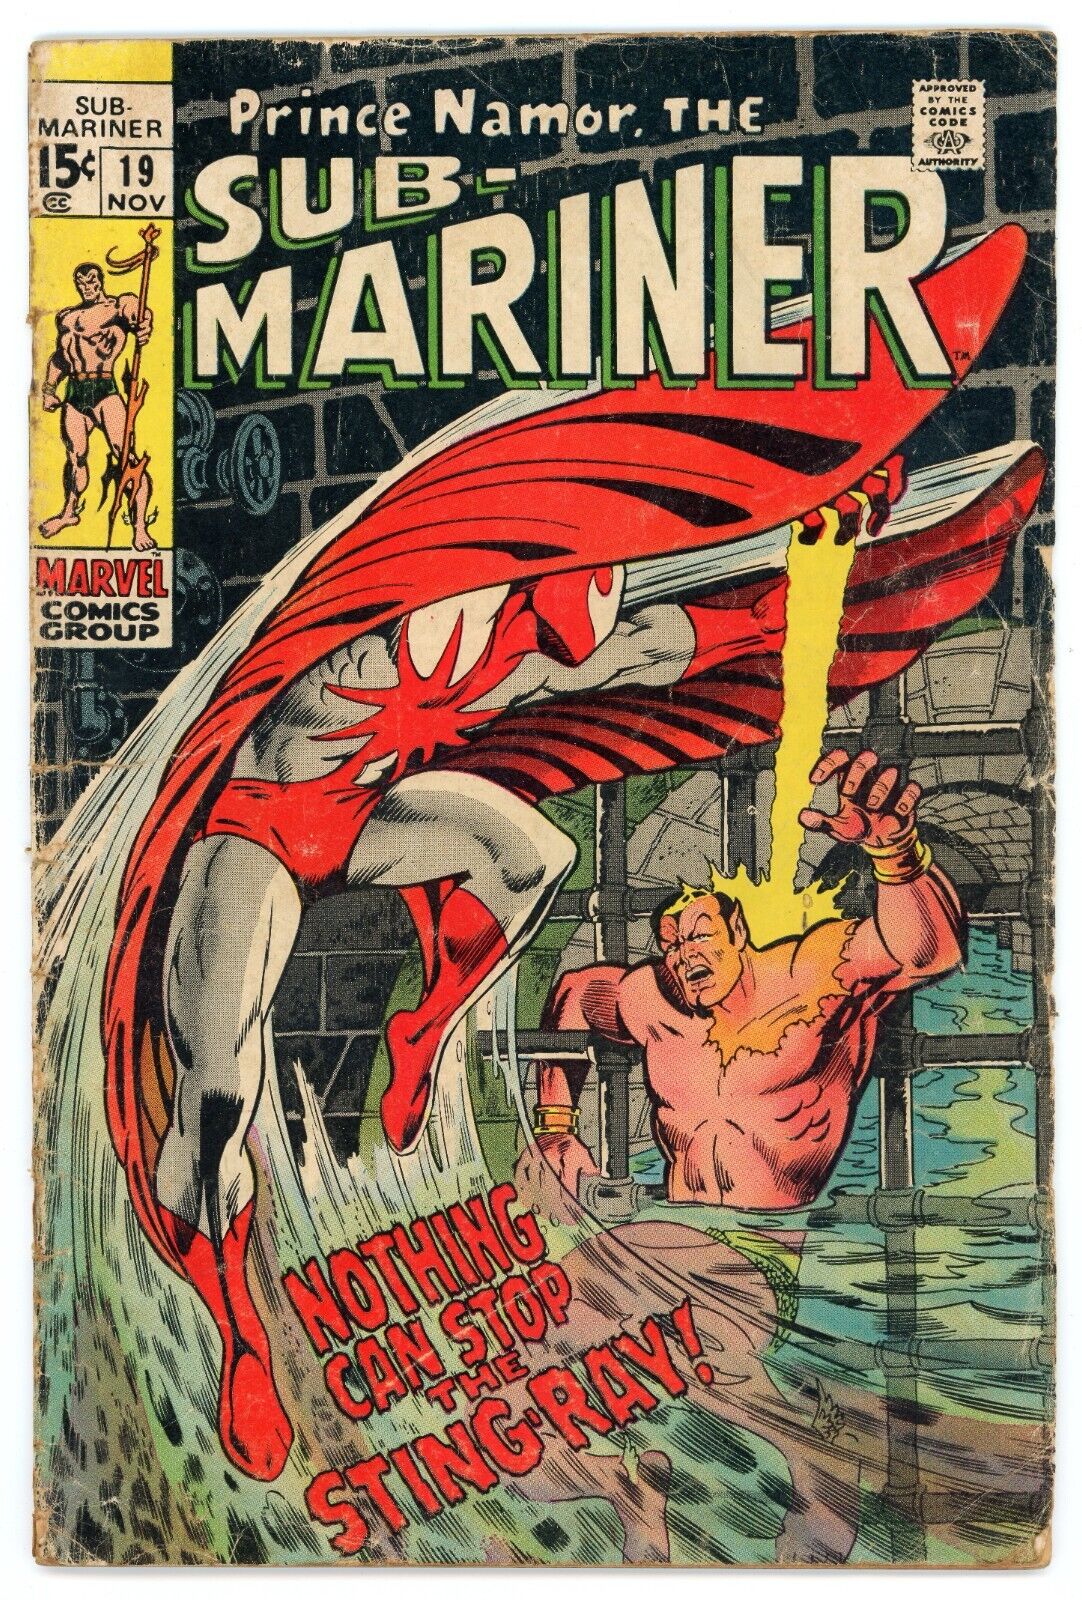 Sub-Mariner #19 Nothing Can Stop Sting-Ray Nov 1969 Marvel (1st App Sting-Ray)